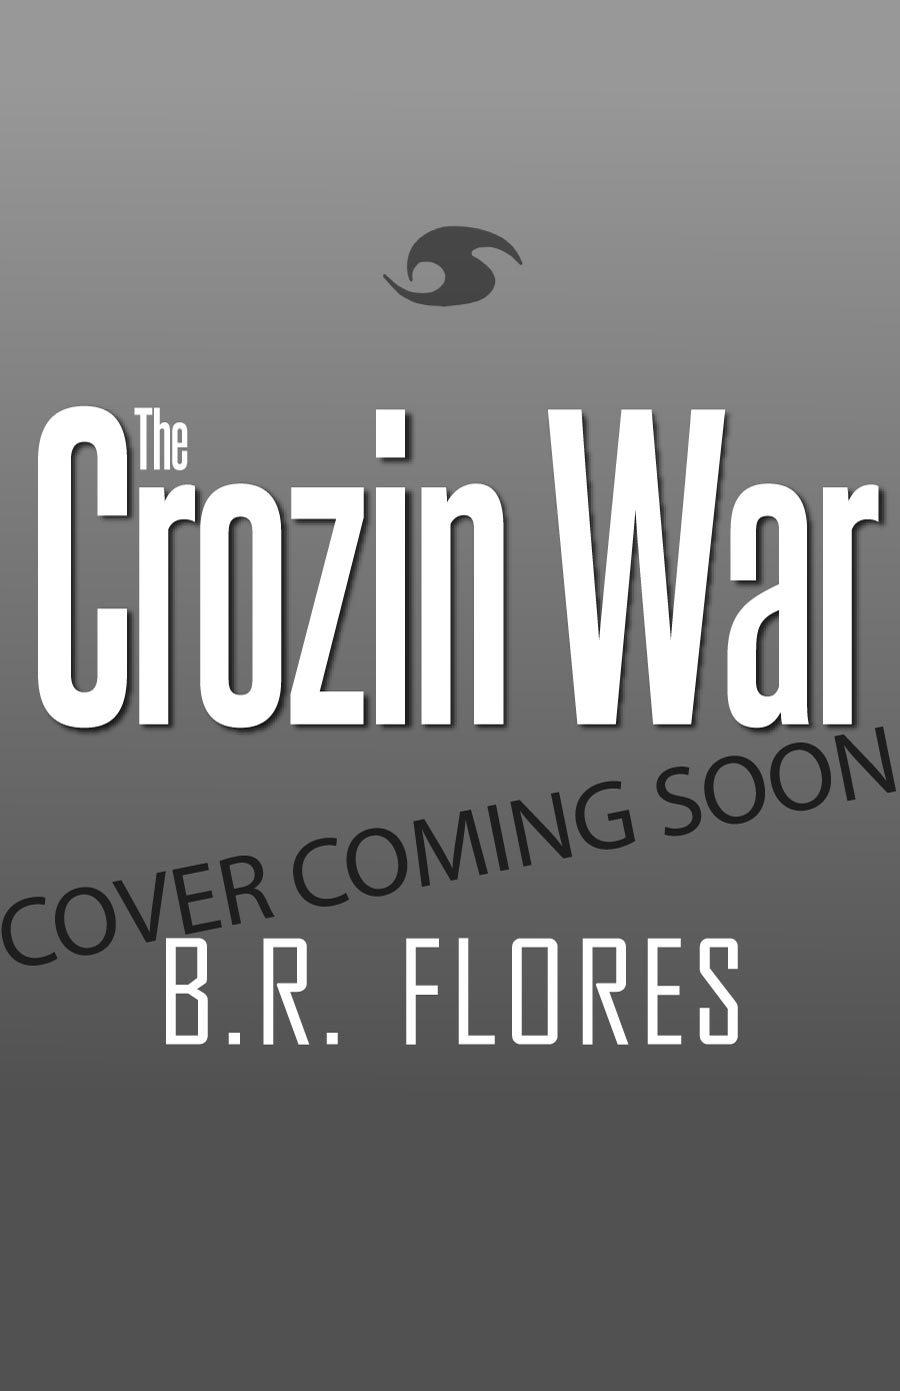 The Crozin War by Brenda Flores